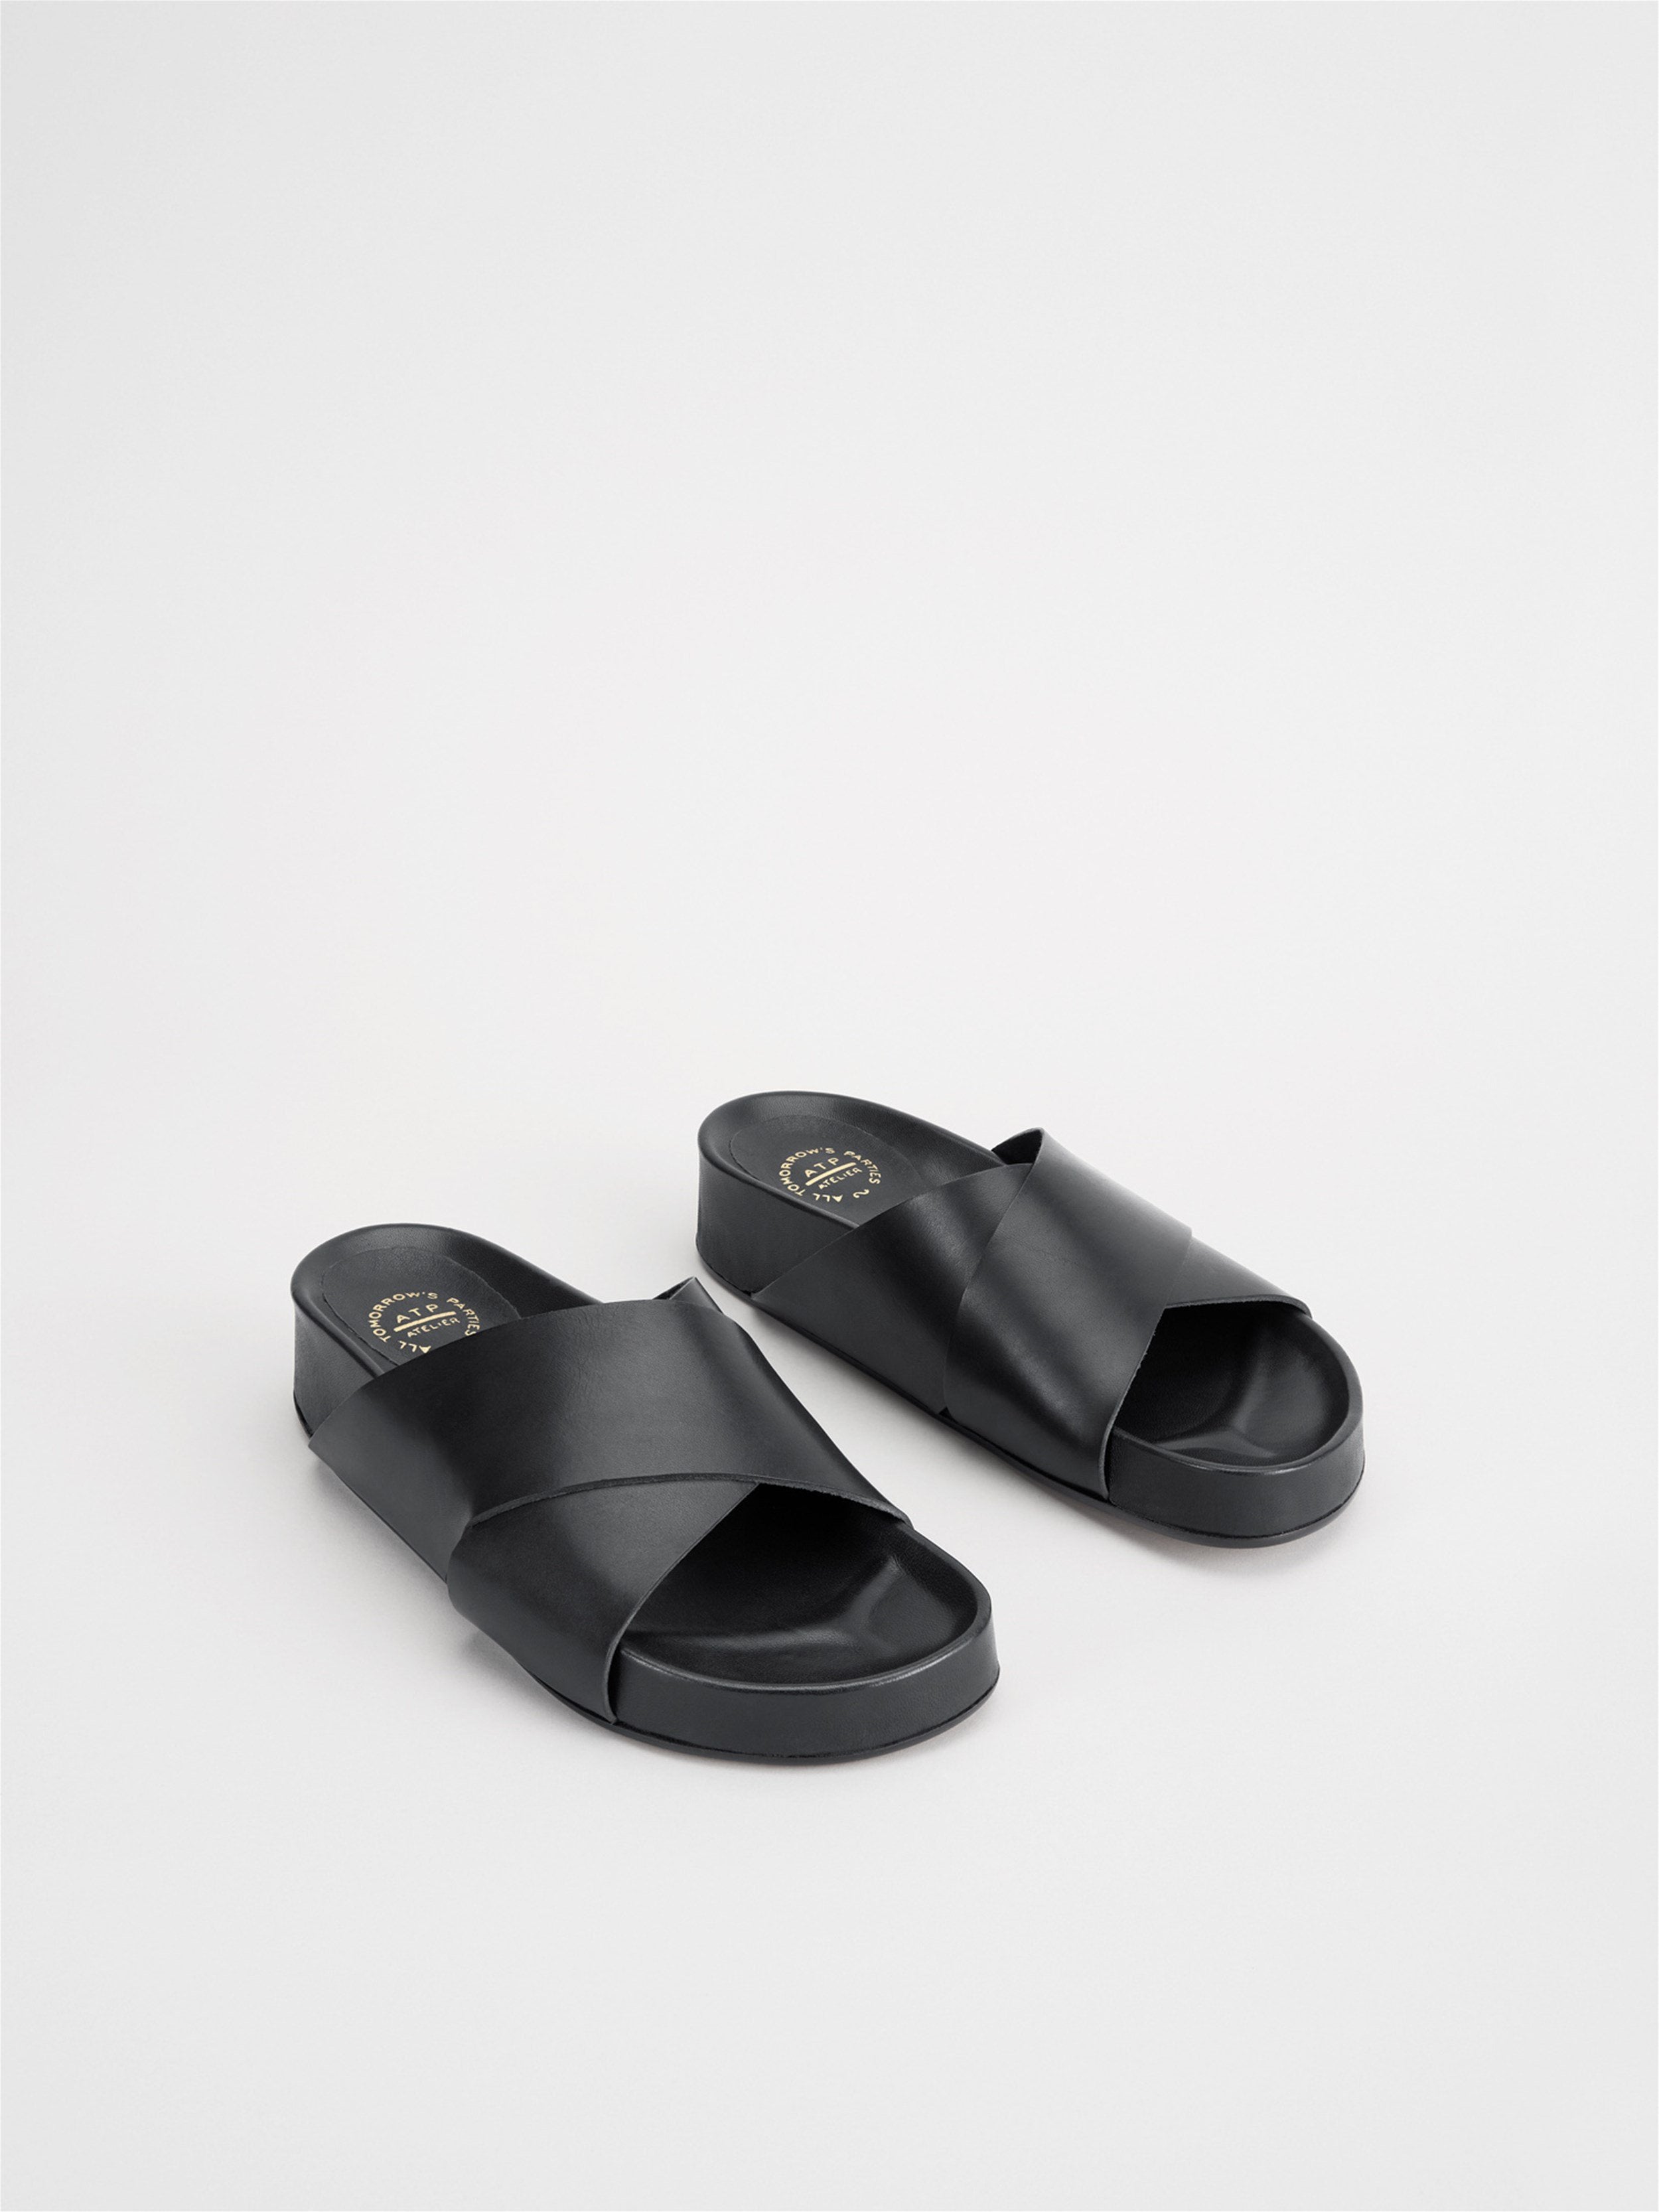 Urbino Black Leather Flat Sandals 111369 - 3